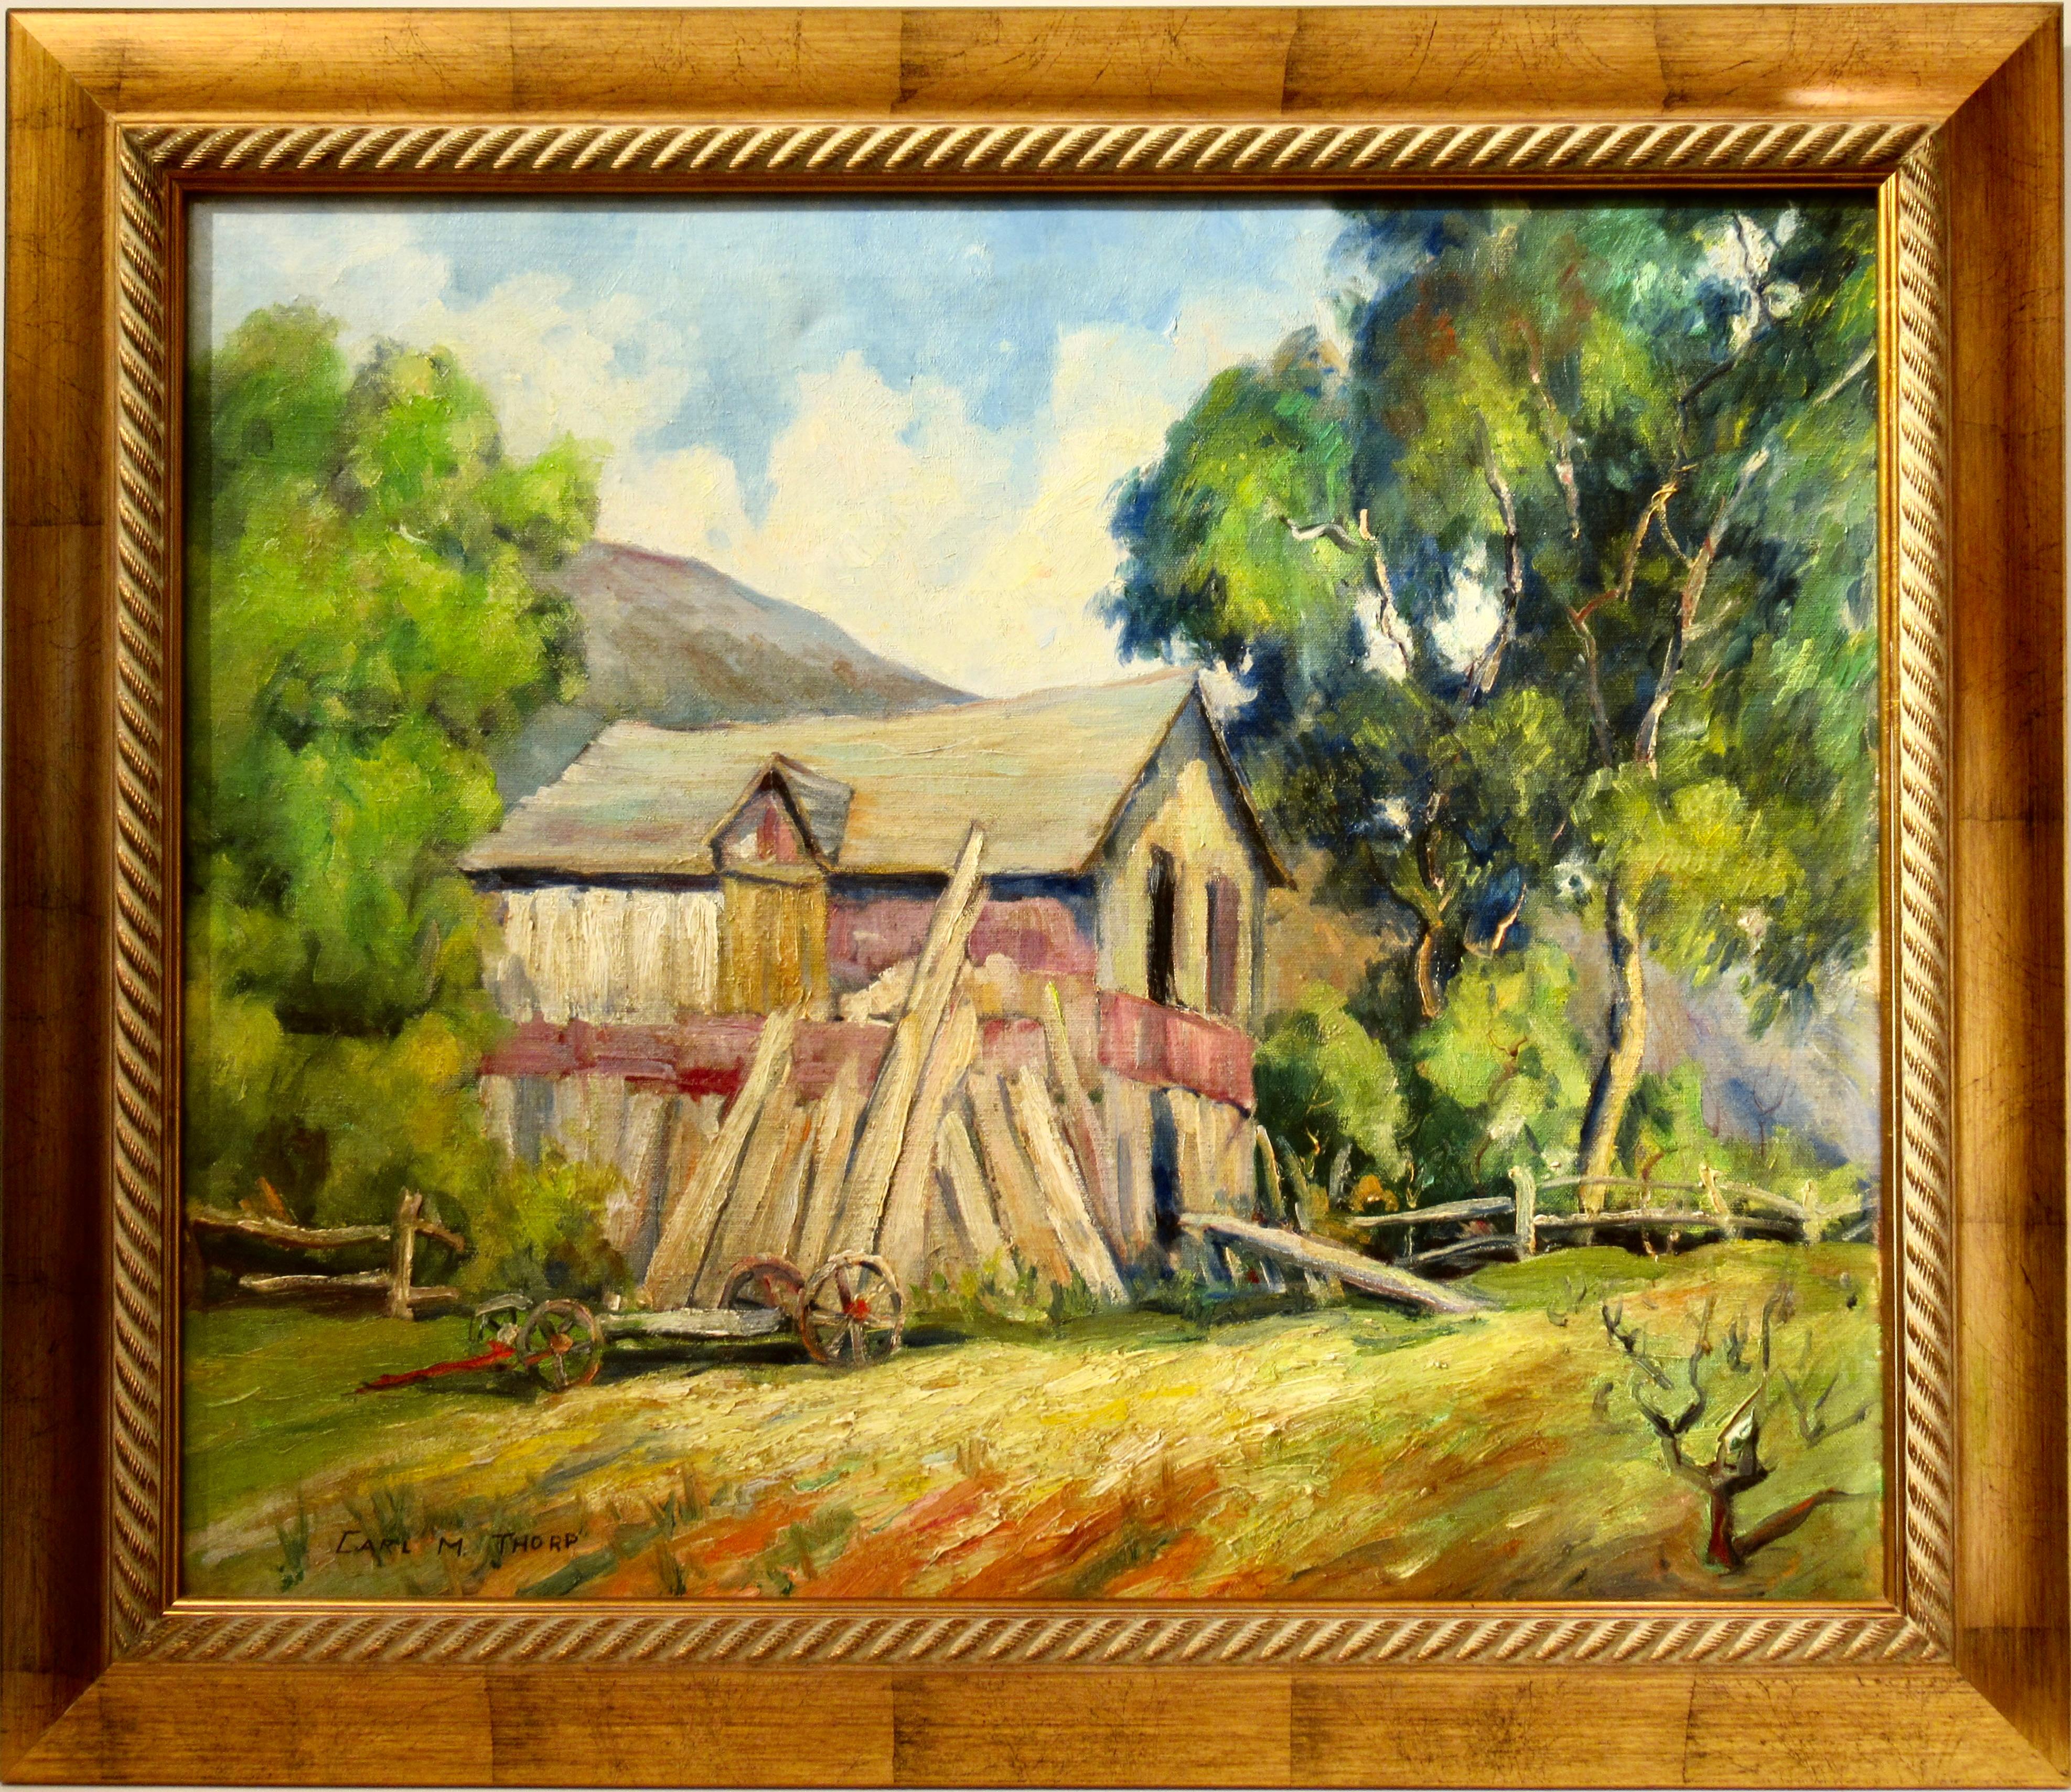 Carl Thorp Figurative Painting - The Lumberjack House, Santa Cruz, Califoenia